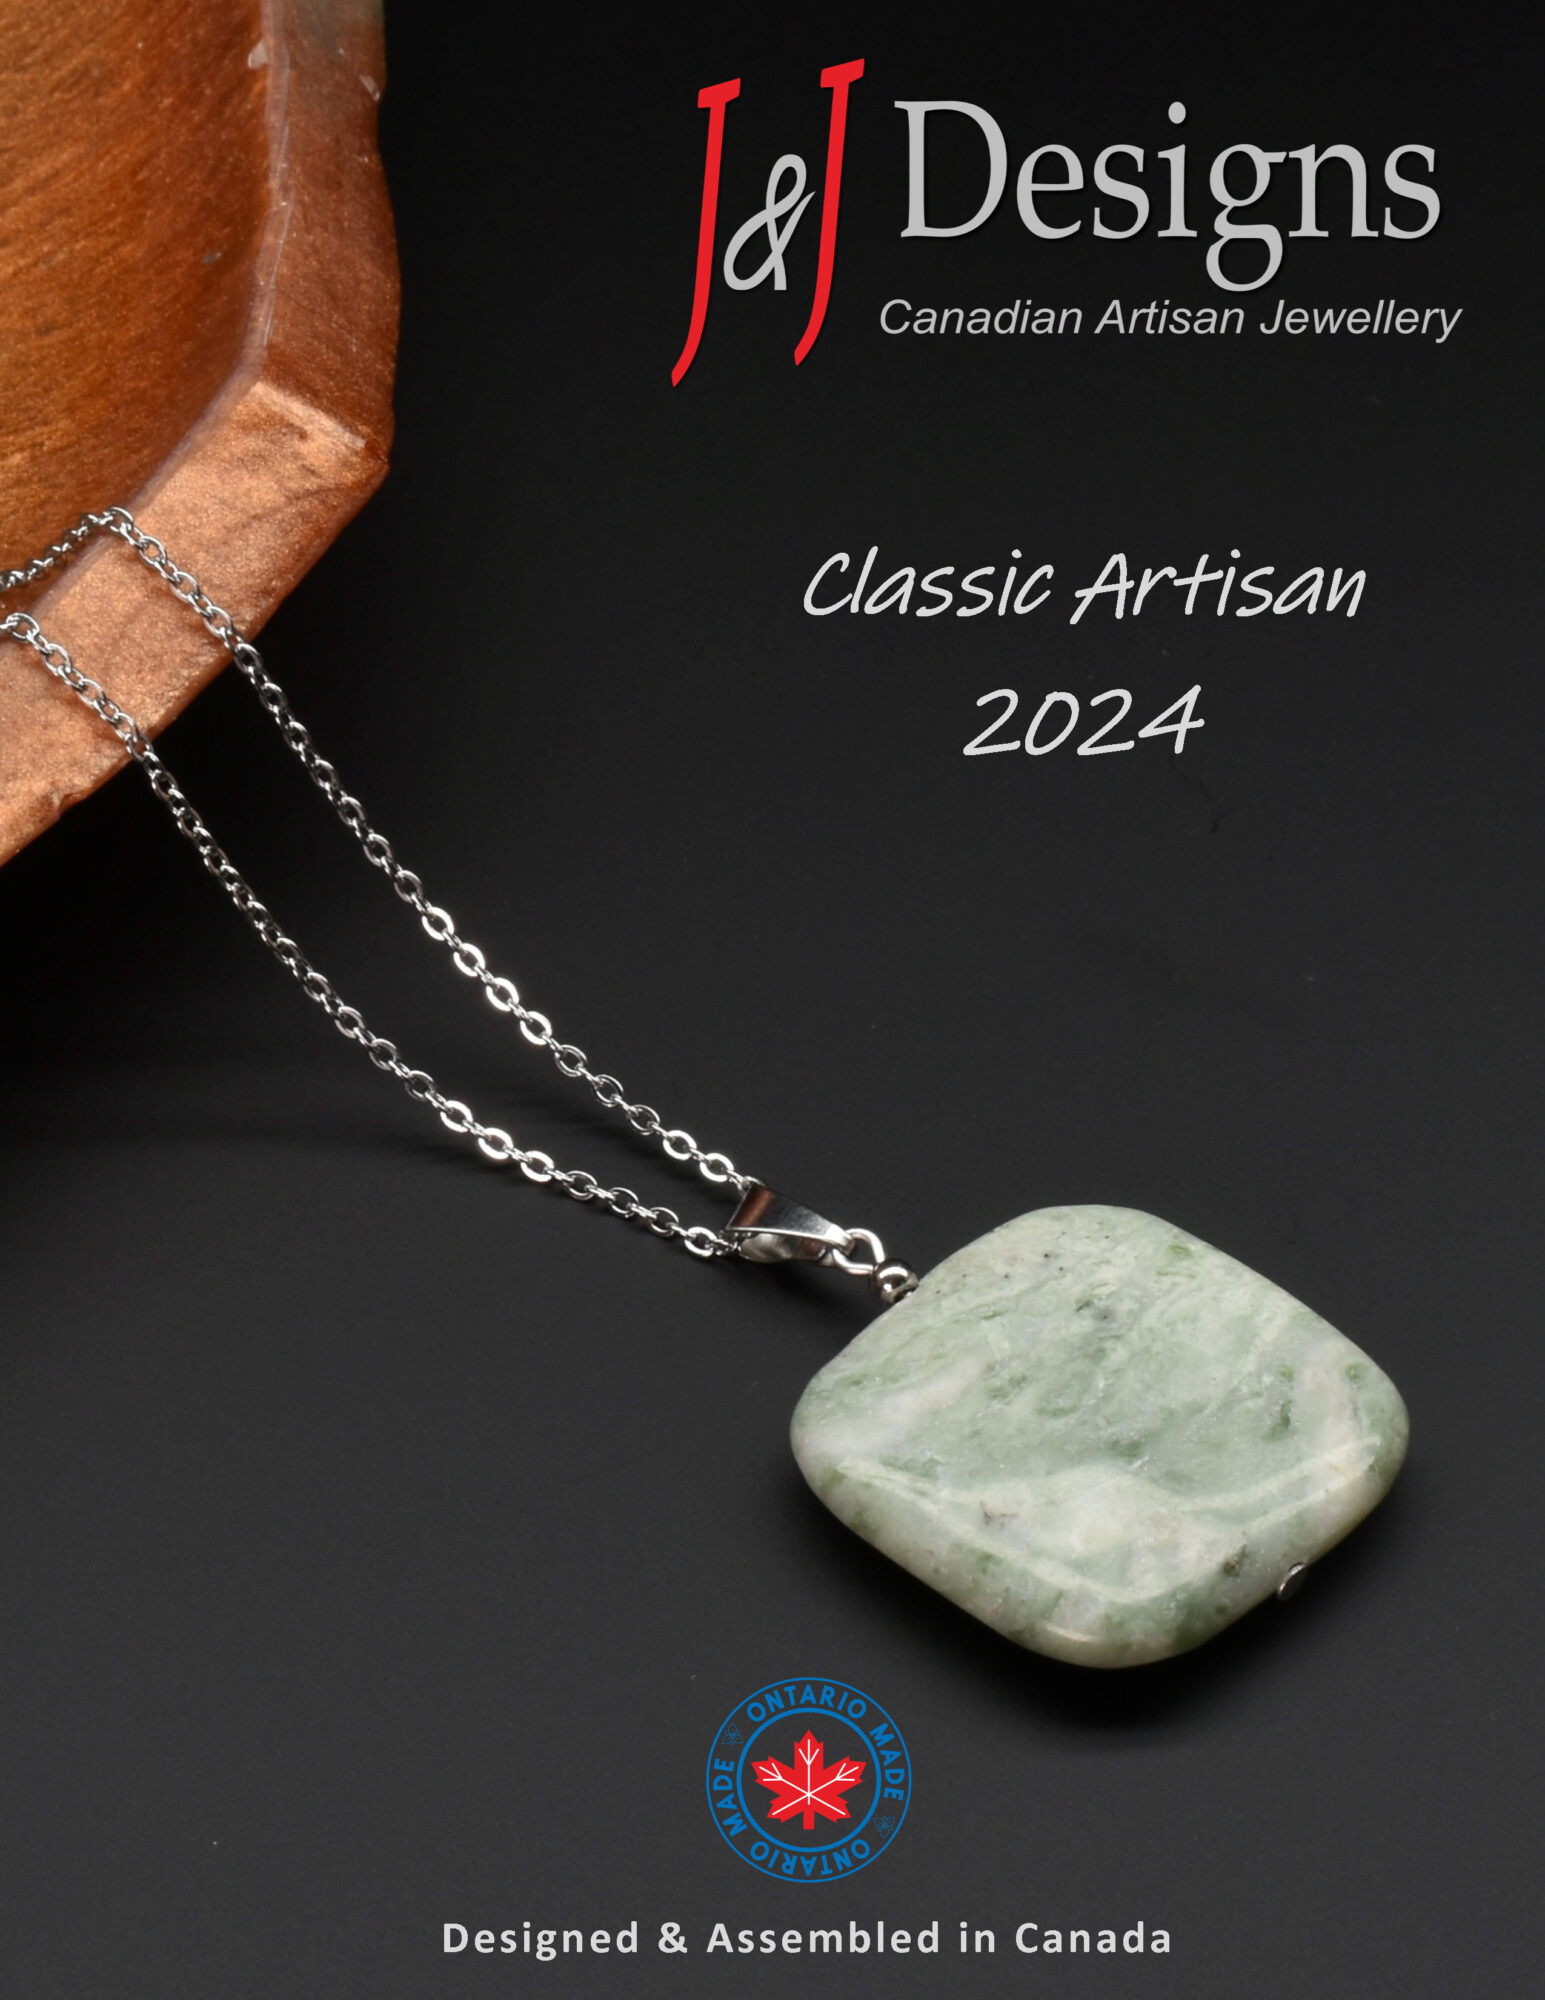 Canadian artisan jewellery